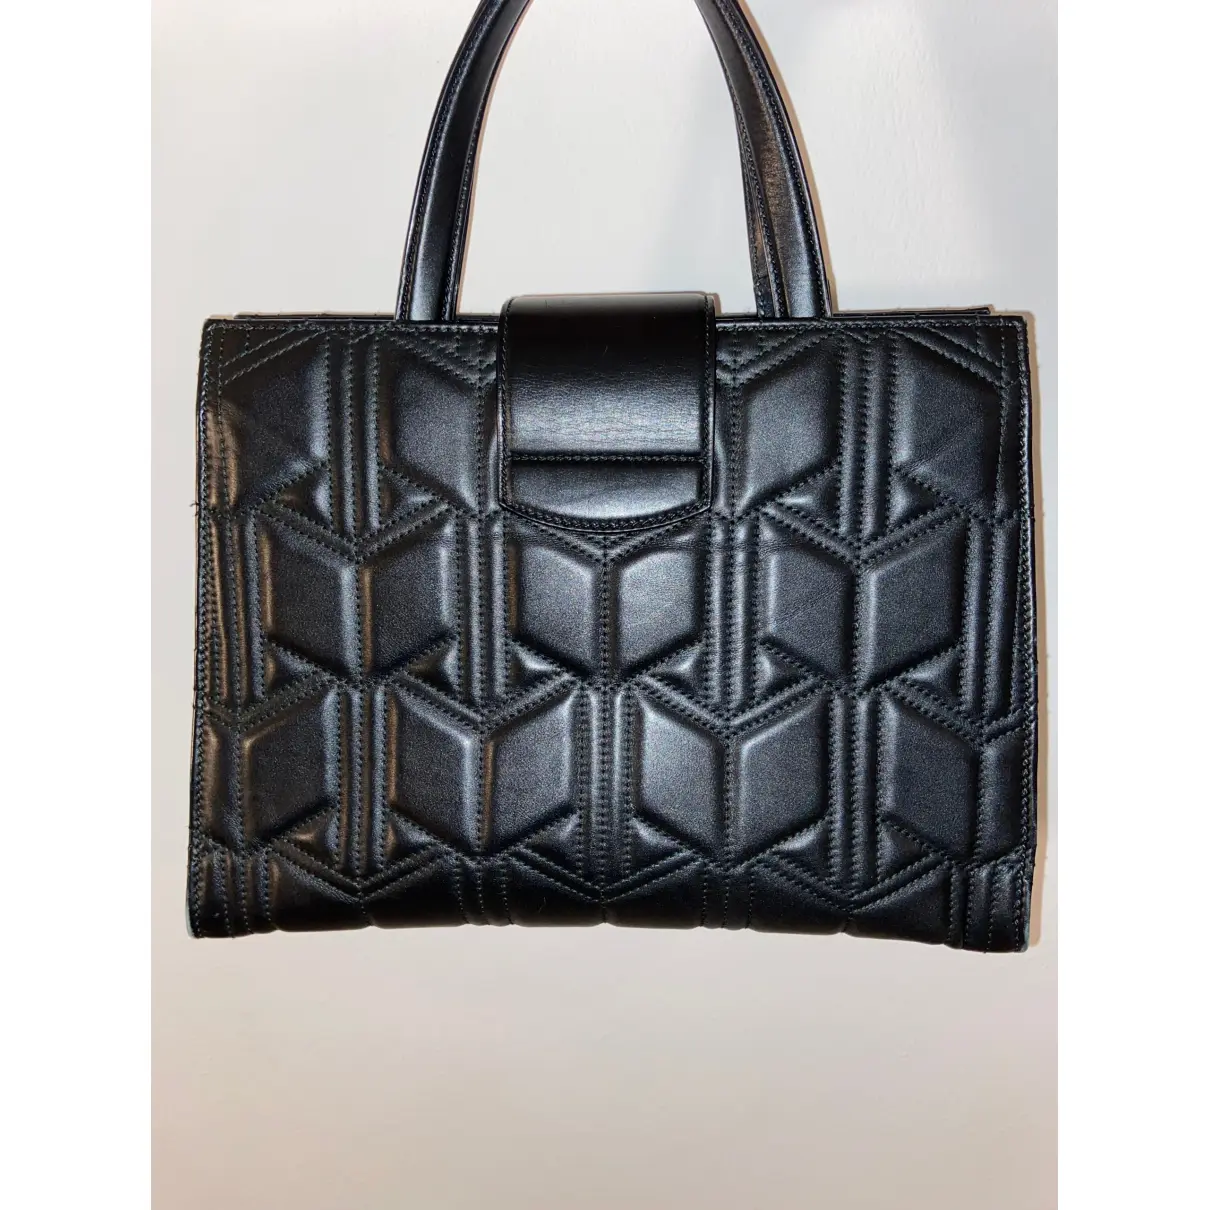 Buy Gucci Dionysus Shopping leather handbag online